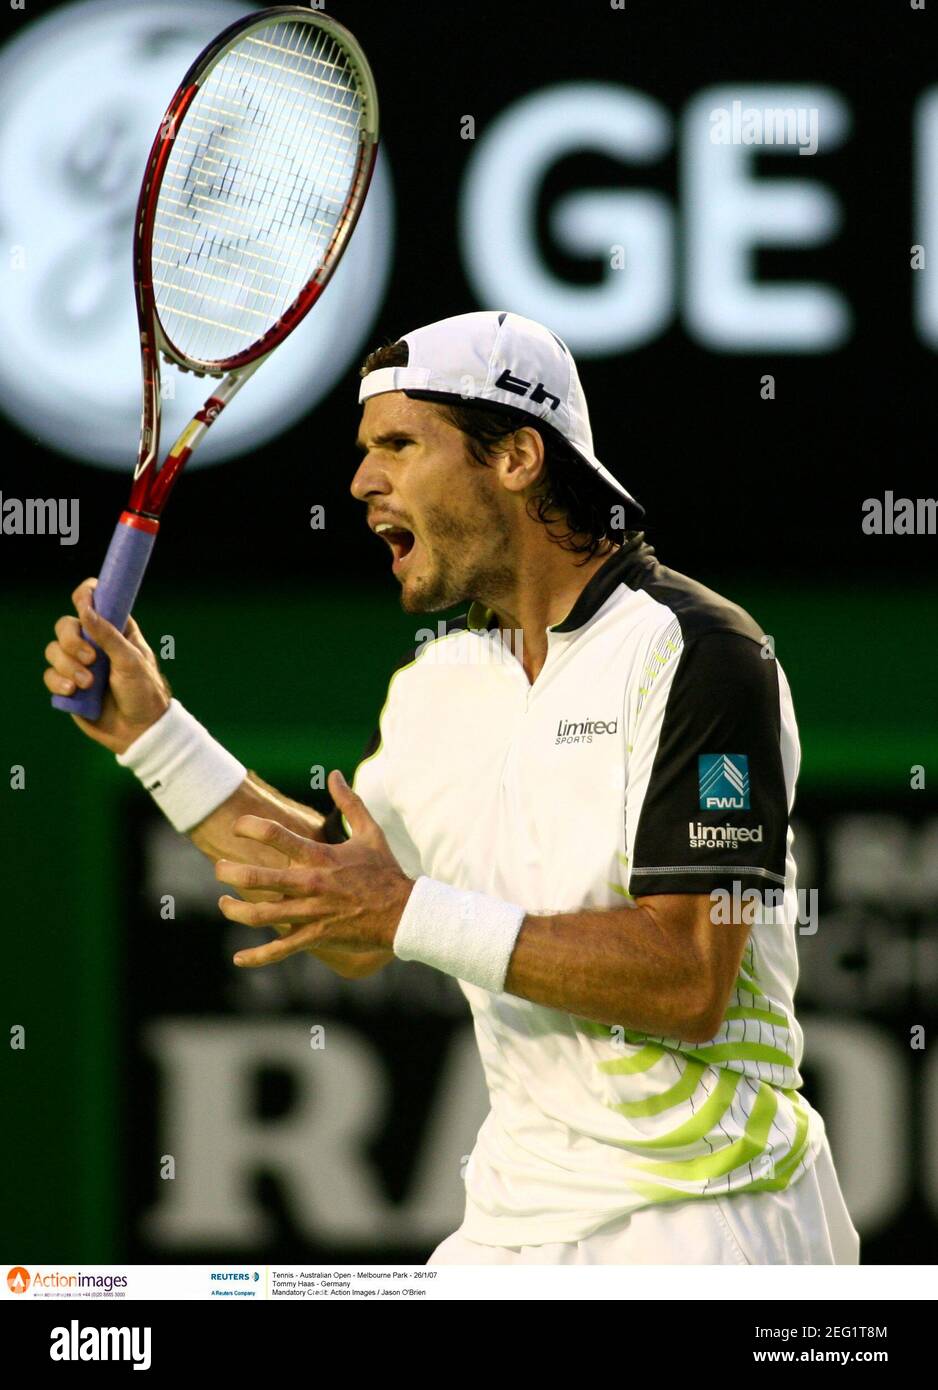 Tennis - Australian Open - Melbourne Park - 26/1/07 Tommy Haas Mandatory Credit: Images Jason O'Brien Stock Photo - Alamy